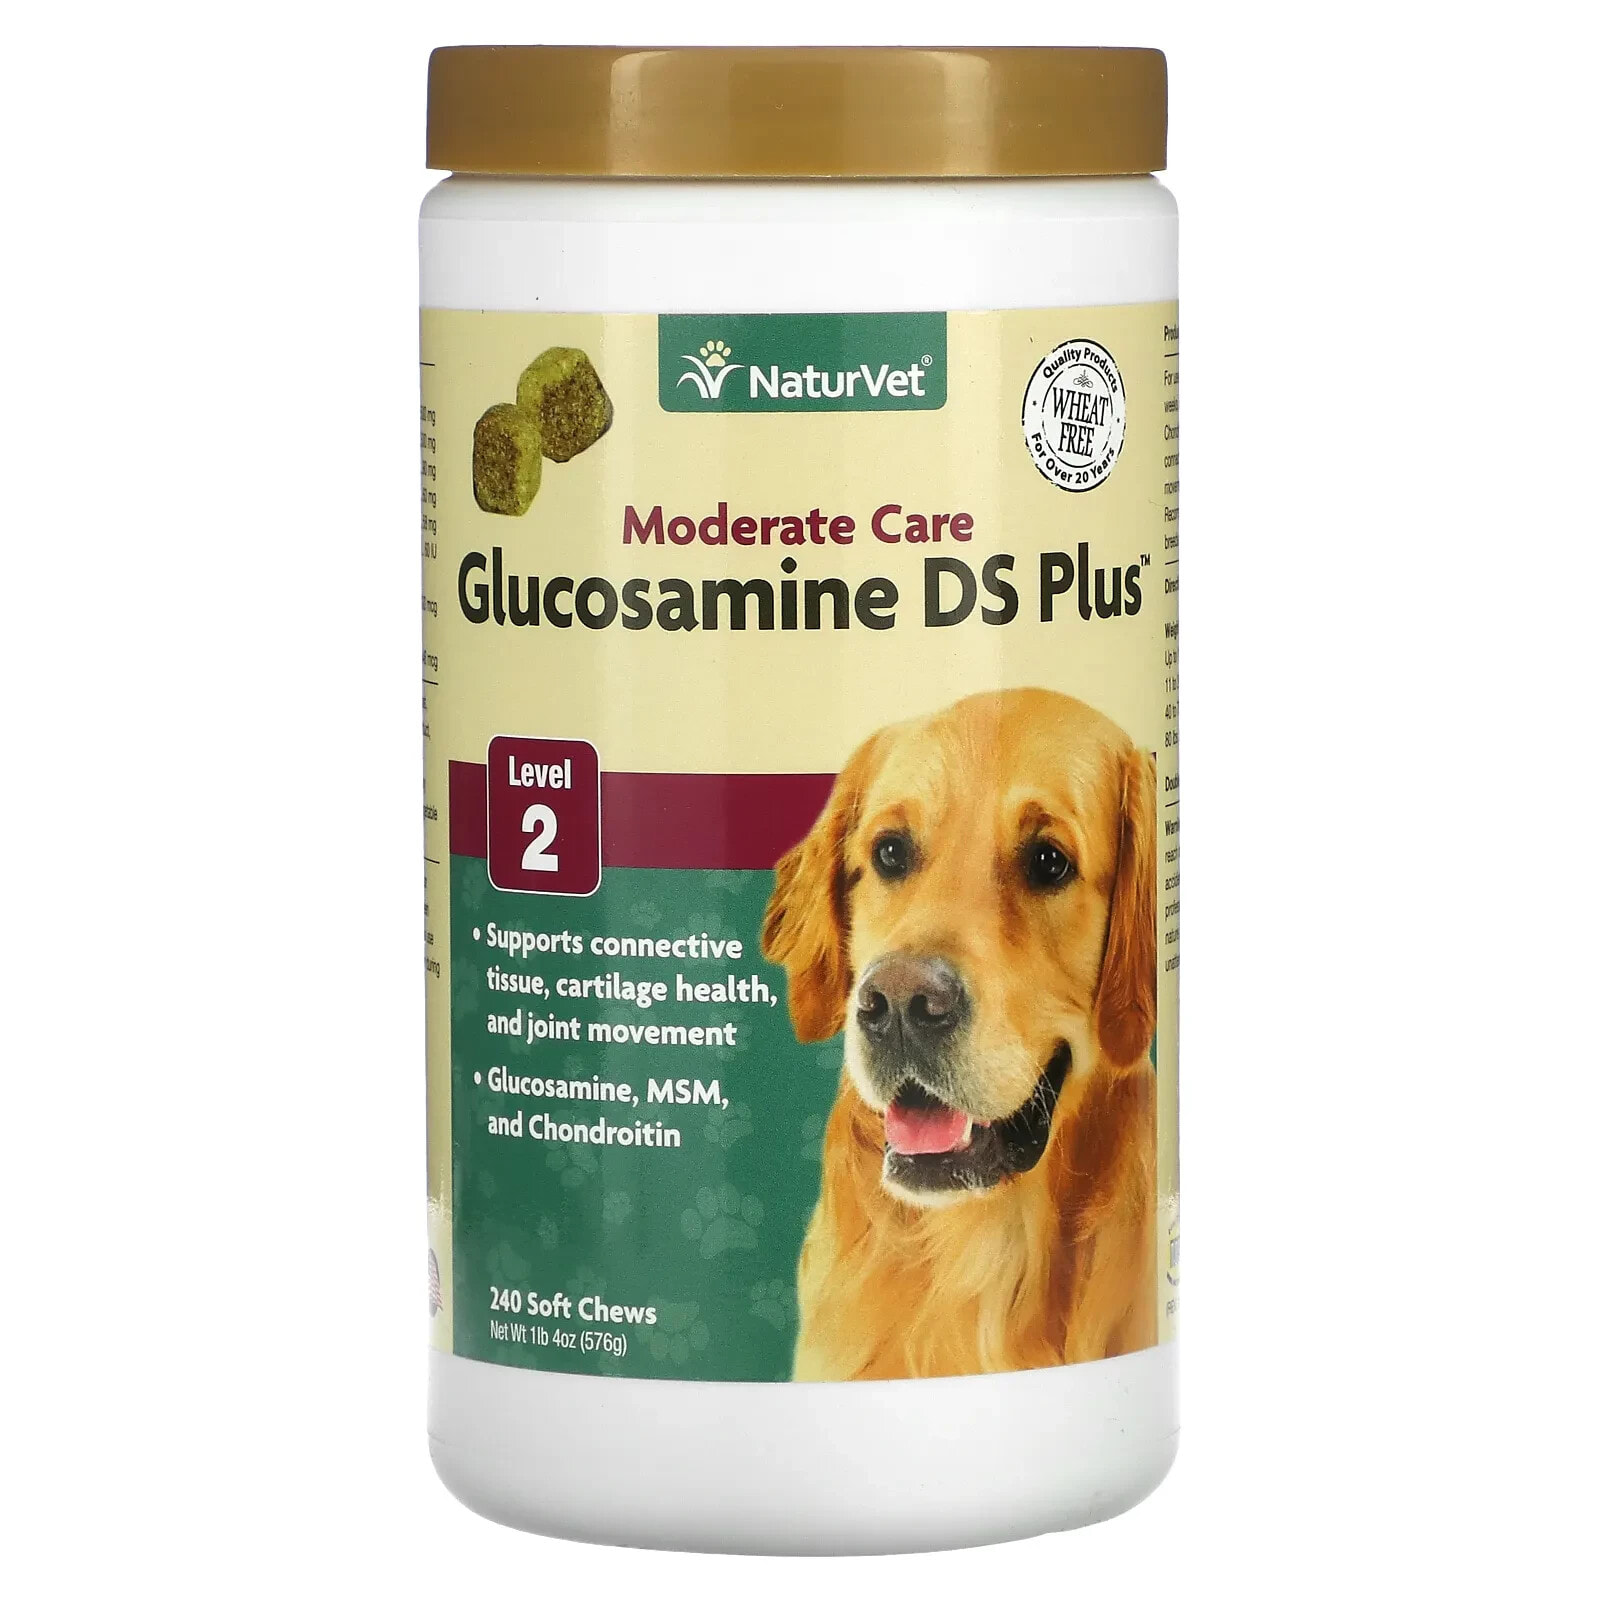 Moderate Care, Glucosamine DS Plus, Level 2, 240 Soft Chews, 1 lb 4 oz (576 g)